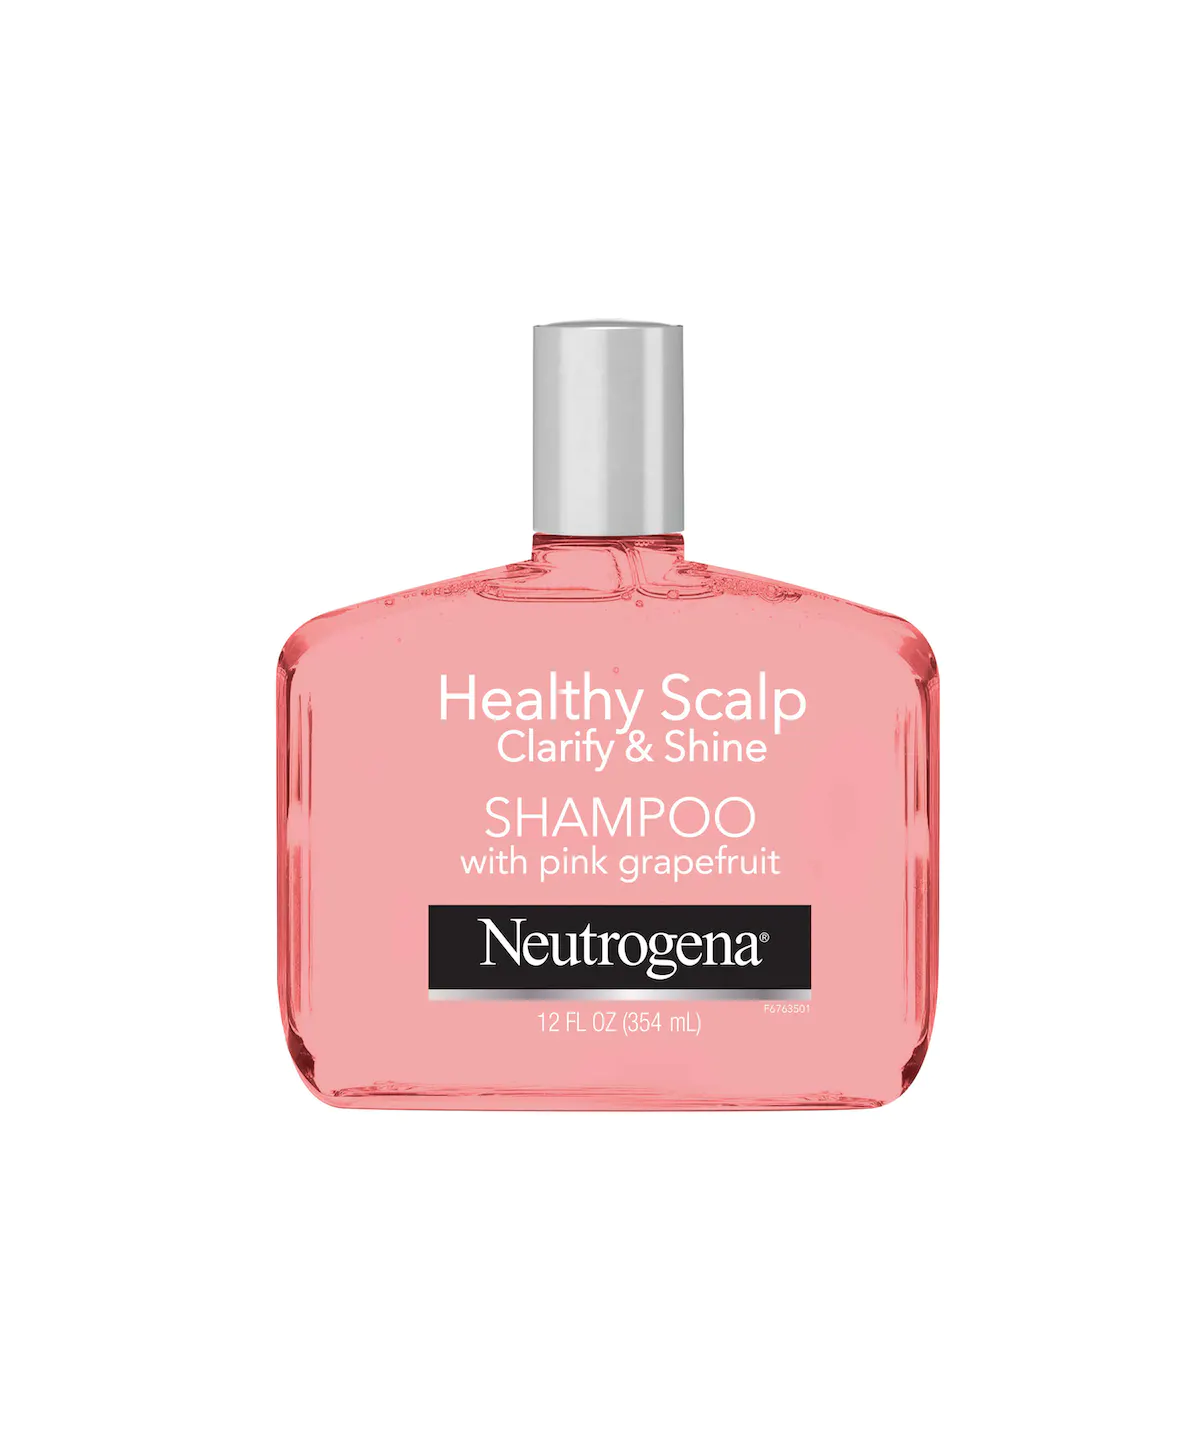 Neutrogena Healthy Scalp Clarify & Shine Shampoo